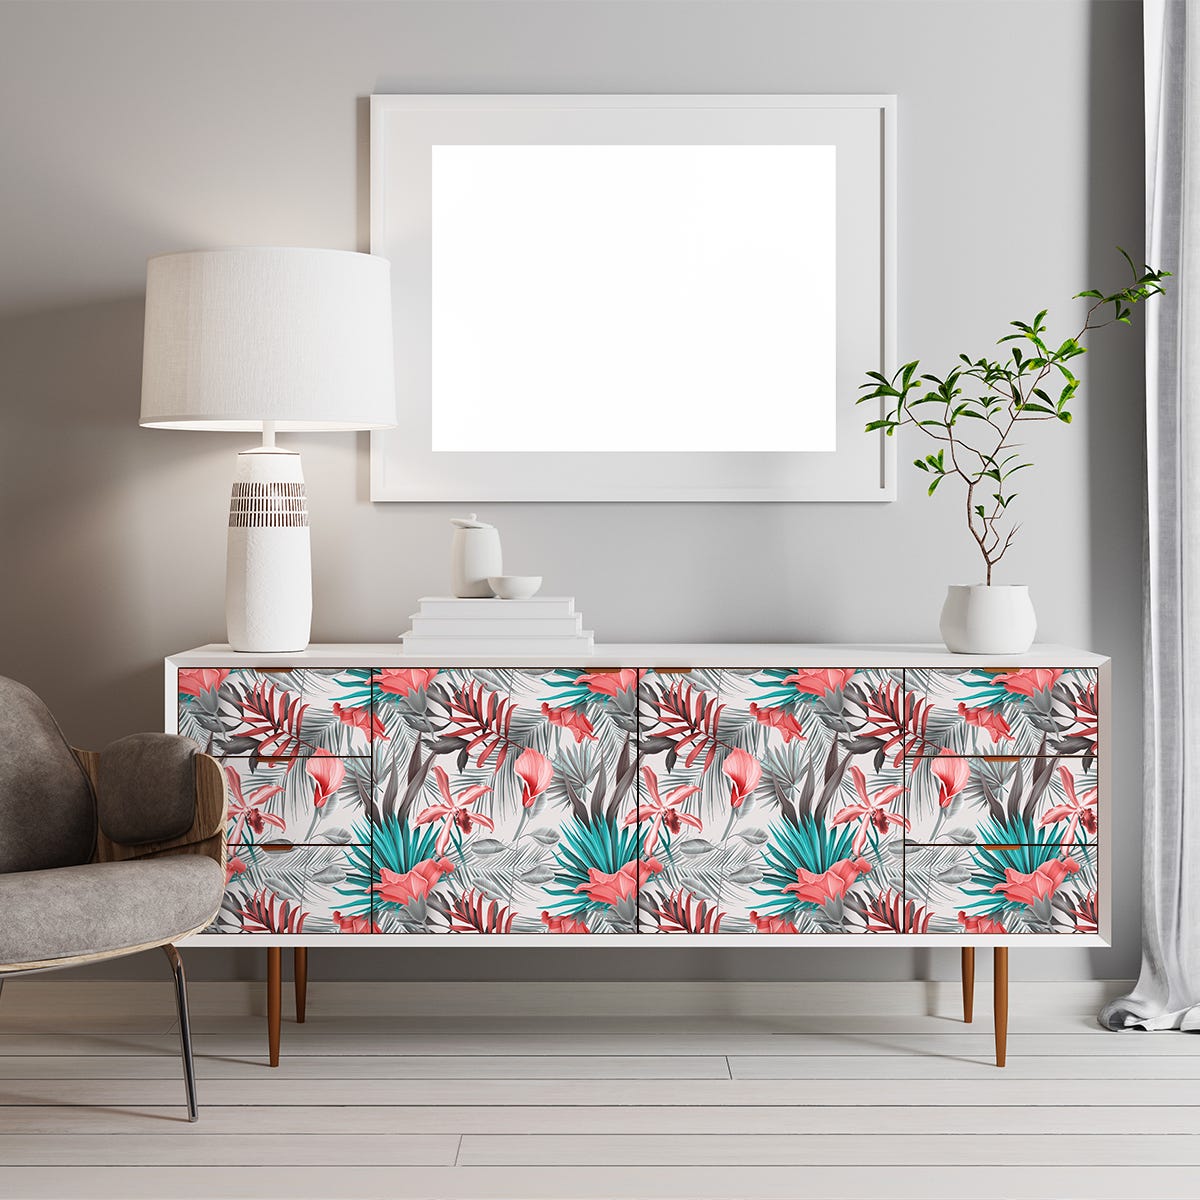 Vinilo terrazzo para muebles nazaré - adhesivo de pared - revestimiento  sticker mural decorativo - 40x60cm